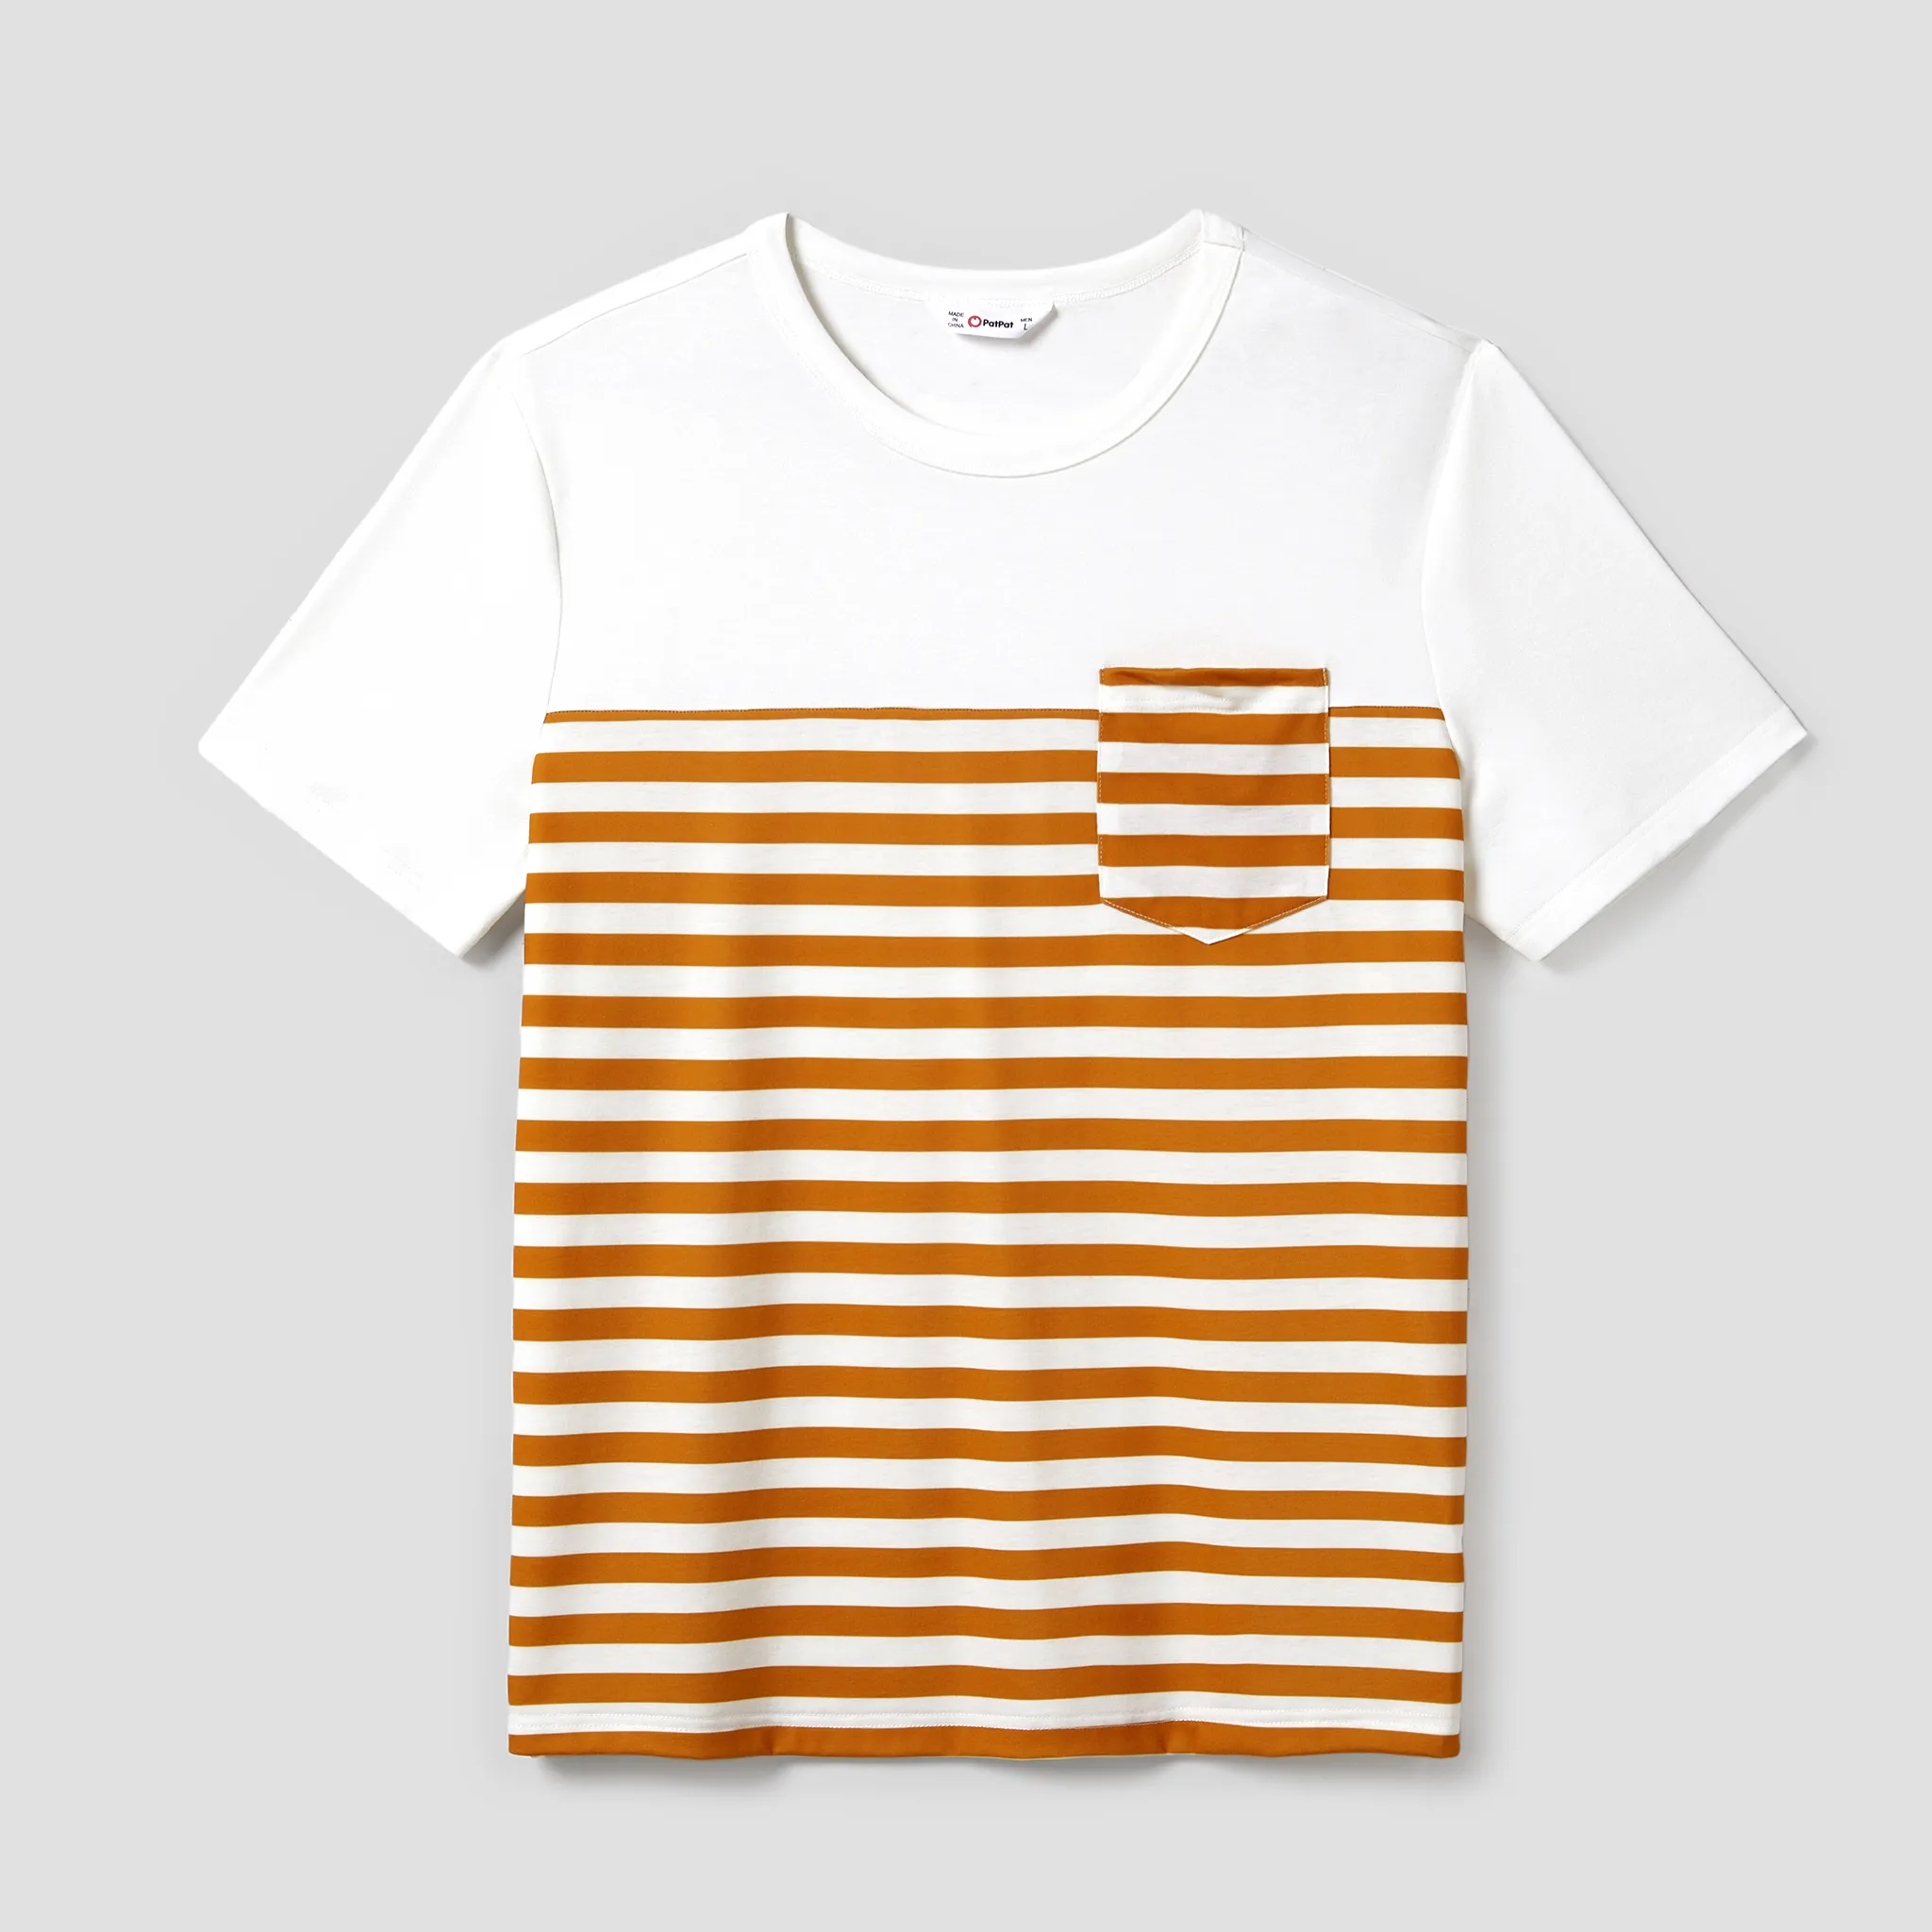 Family Matching Stripe T-shirt And White Top With Orange Polka Dot Wrap Bottom Ruffled Hem Skirt Set